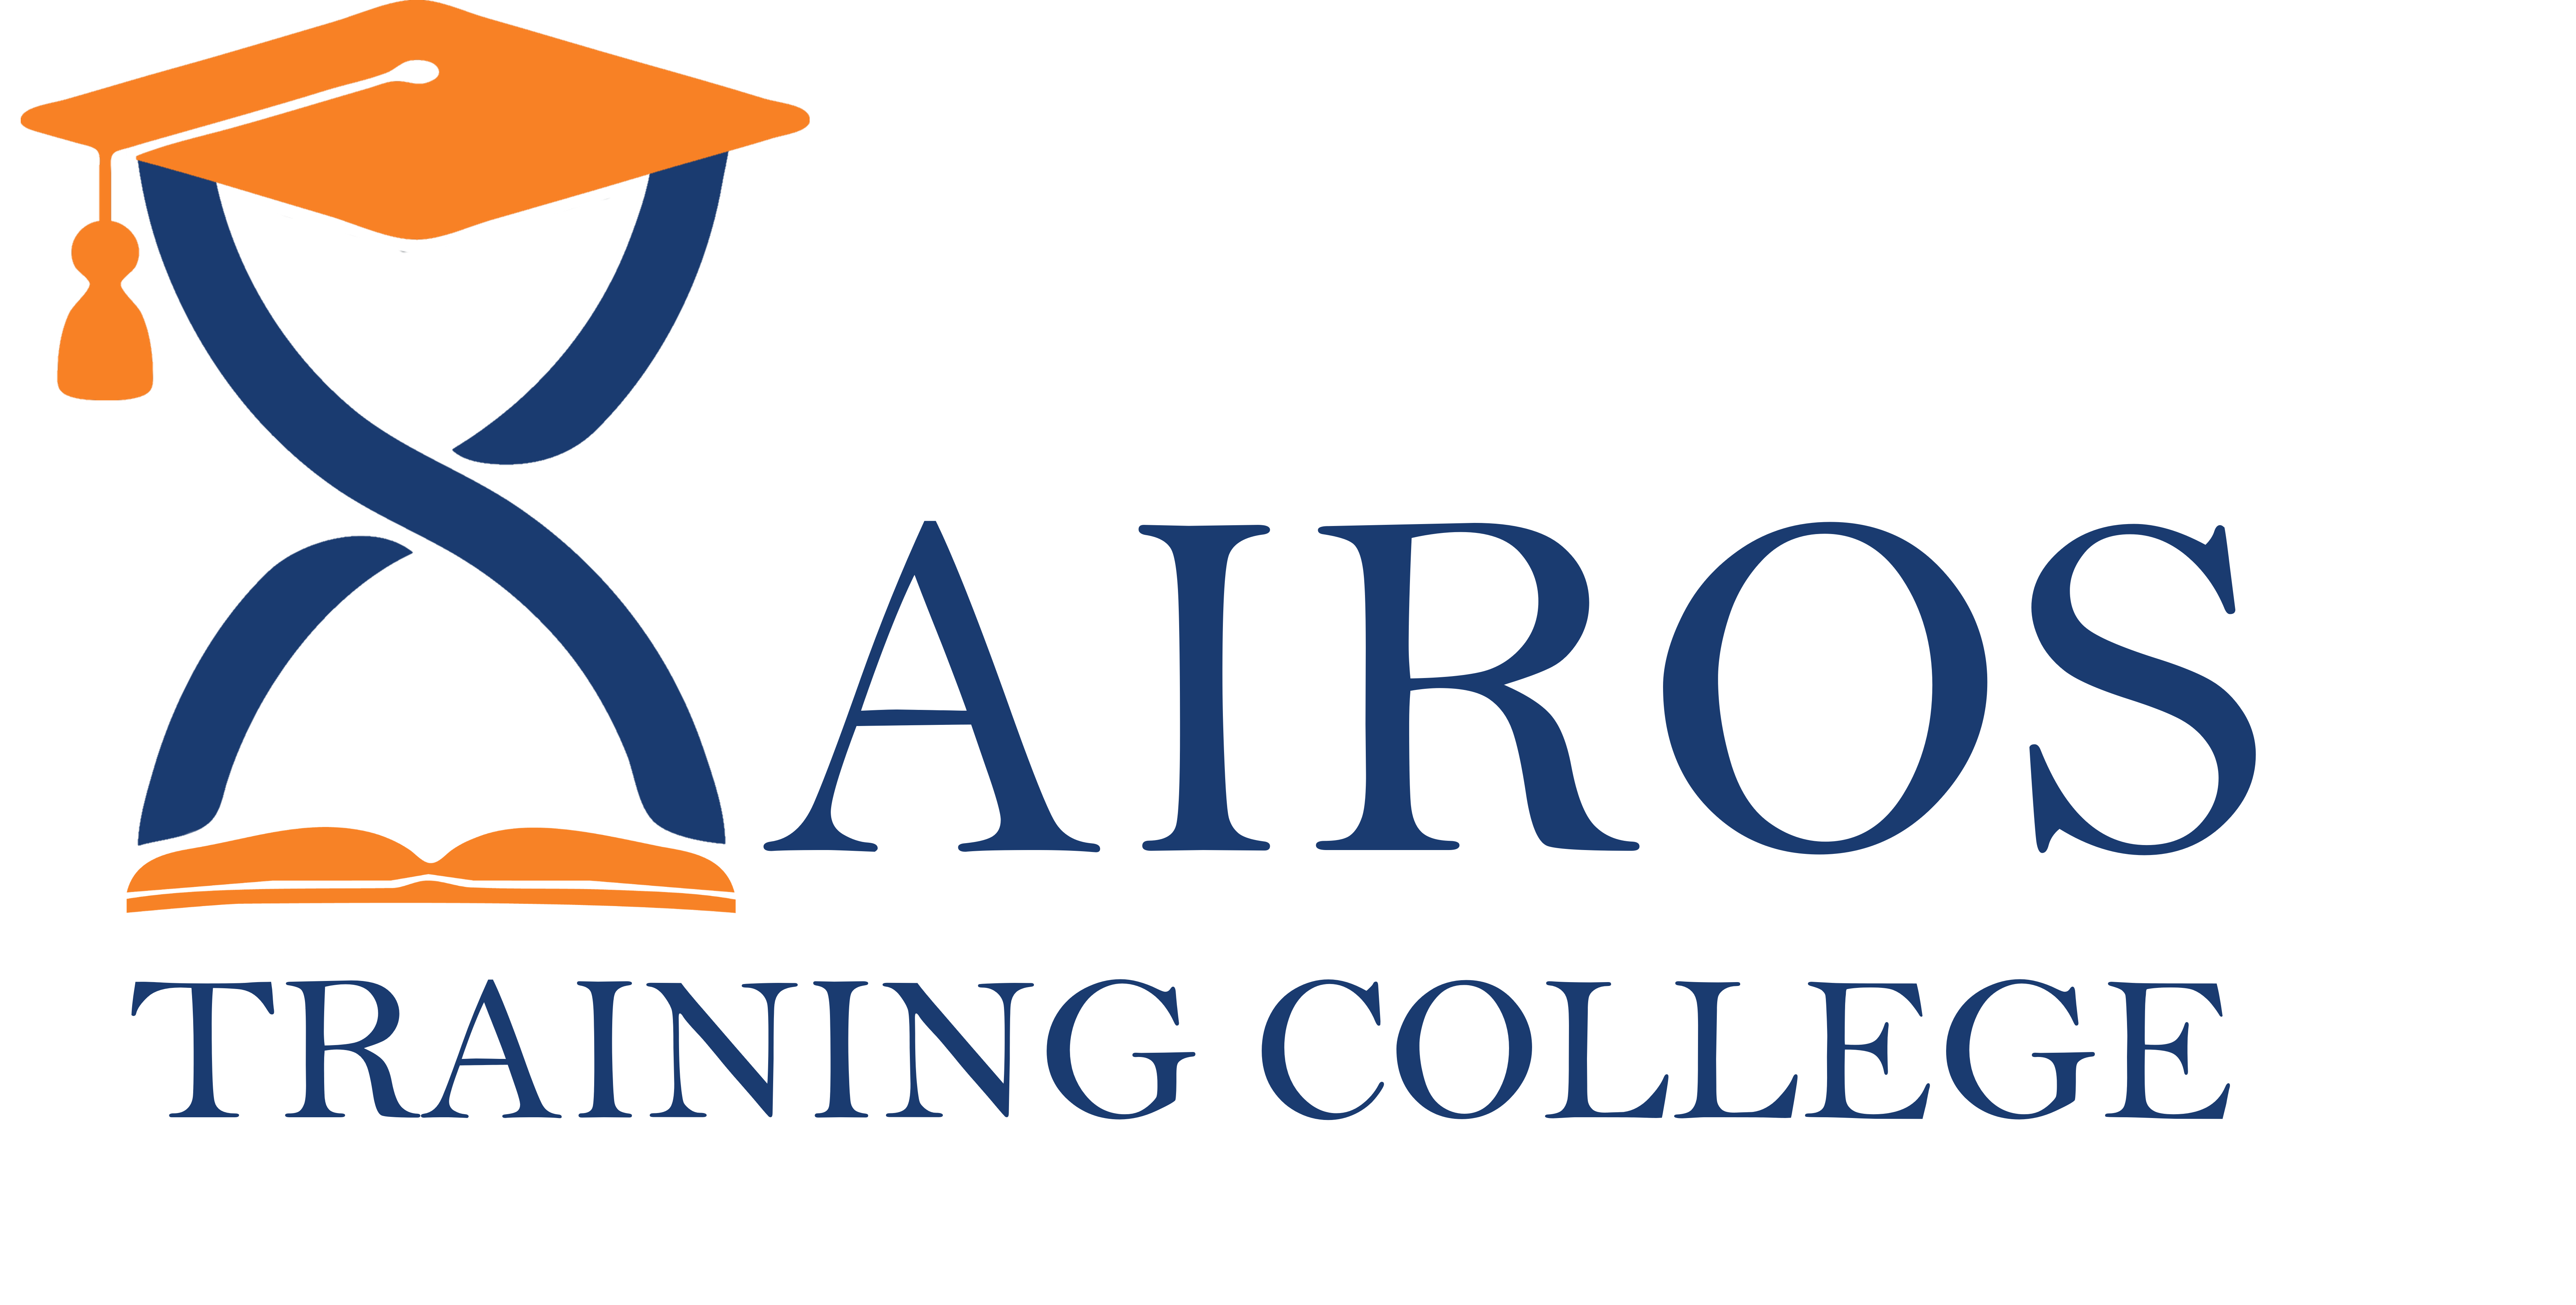 Kairos Training College